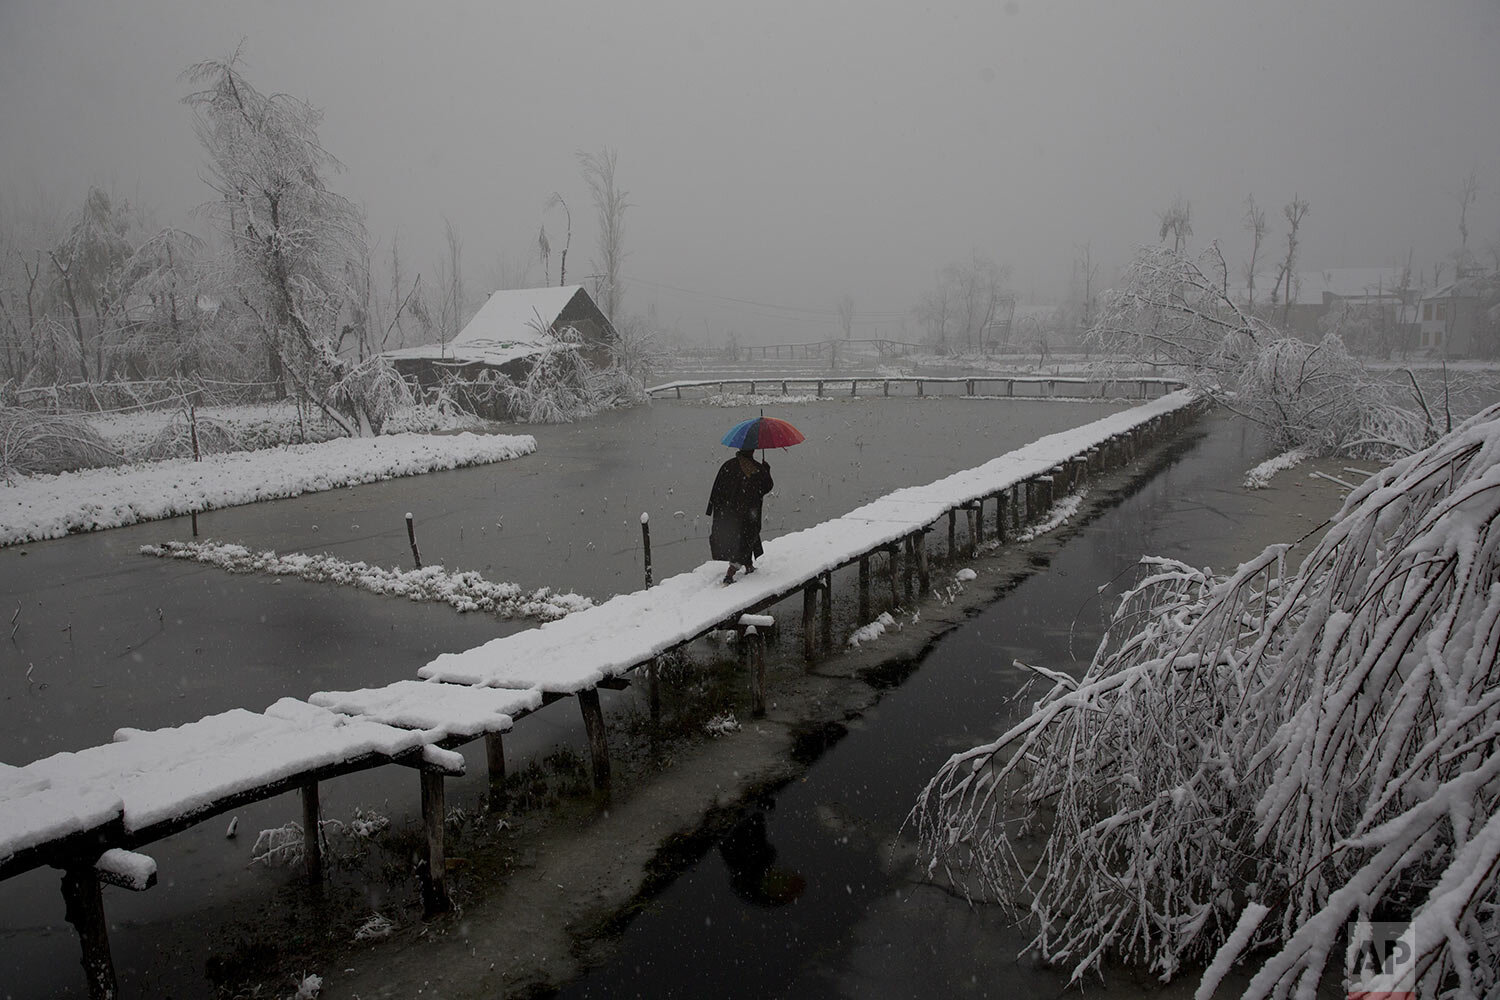  A Kashmiri man walks on a snow covered footbridge as it snows in the interiors of Dal Lake Srinagar, Indian controlled Kashmir, Friday, Dec. 13, 2019. (AP Photo/ Dar Yasin) 